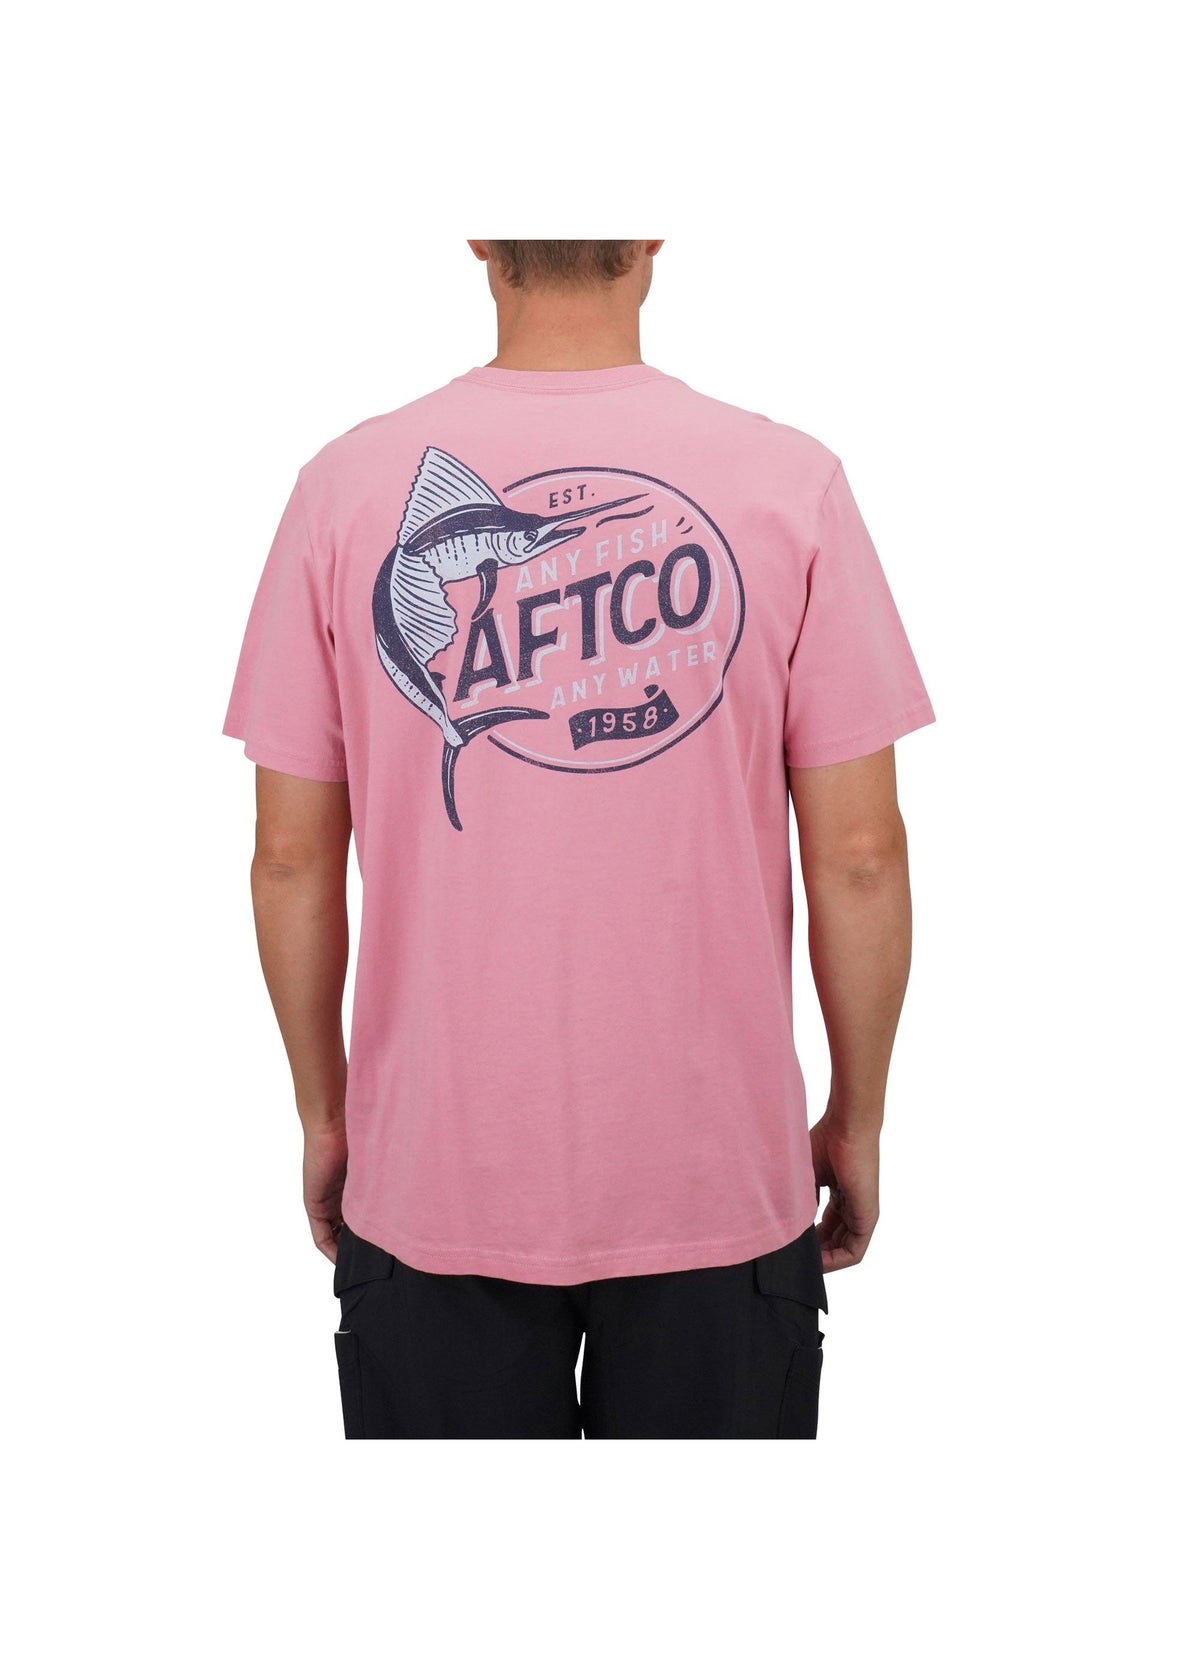 Aftco - Pocket t-shirt